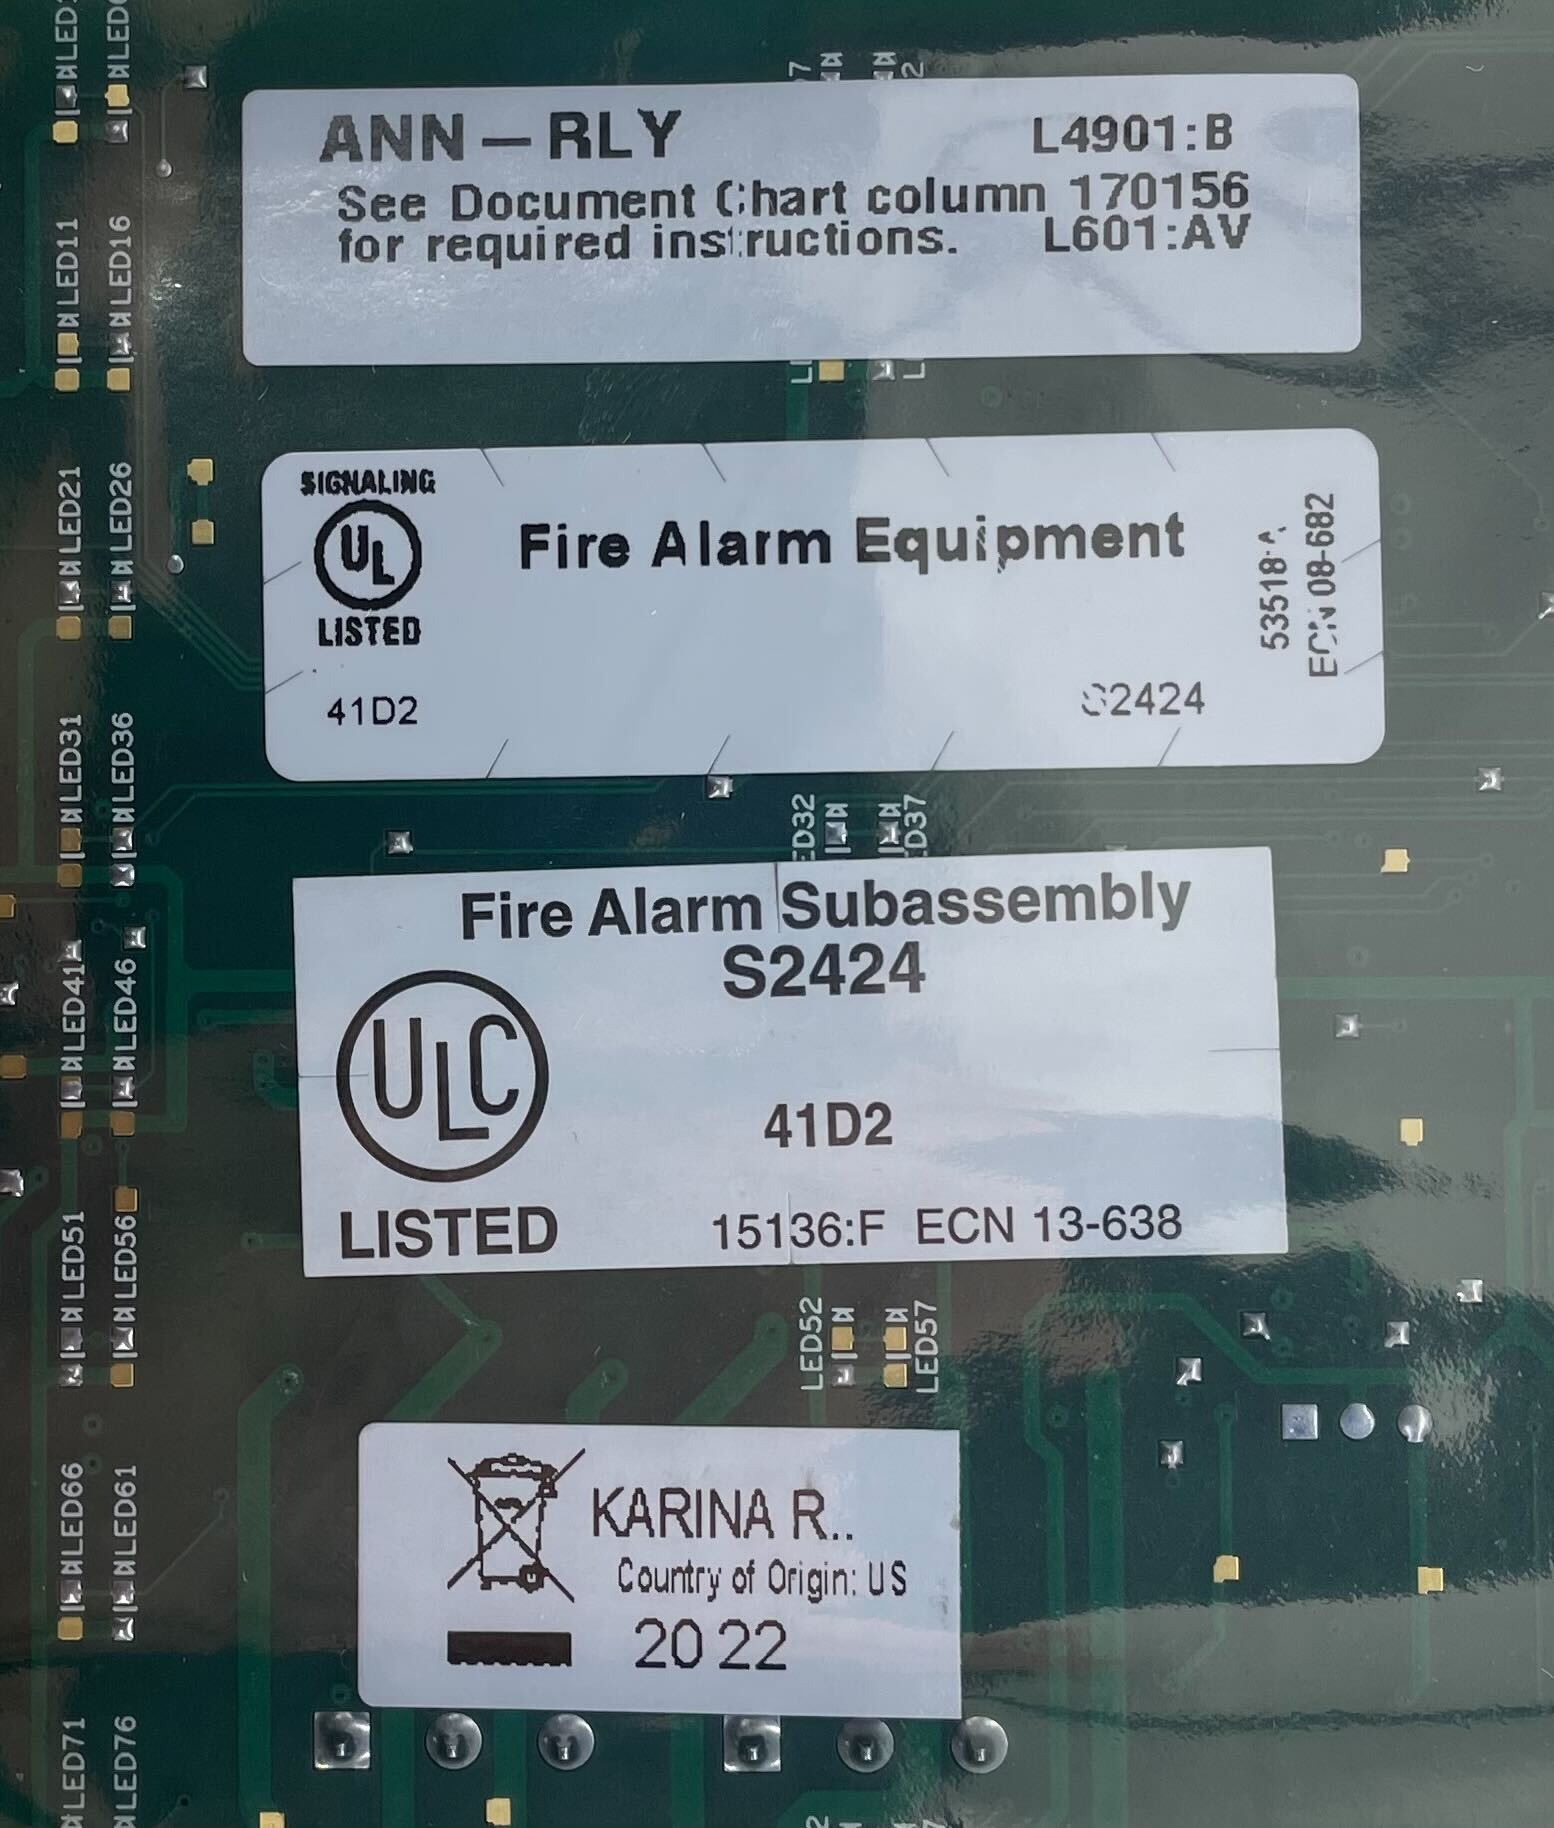 Firelite ANN-RLY - The Fire Alarm Supplier